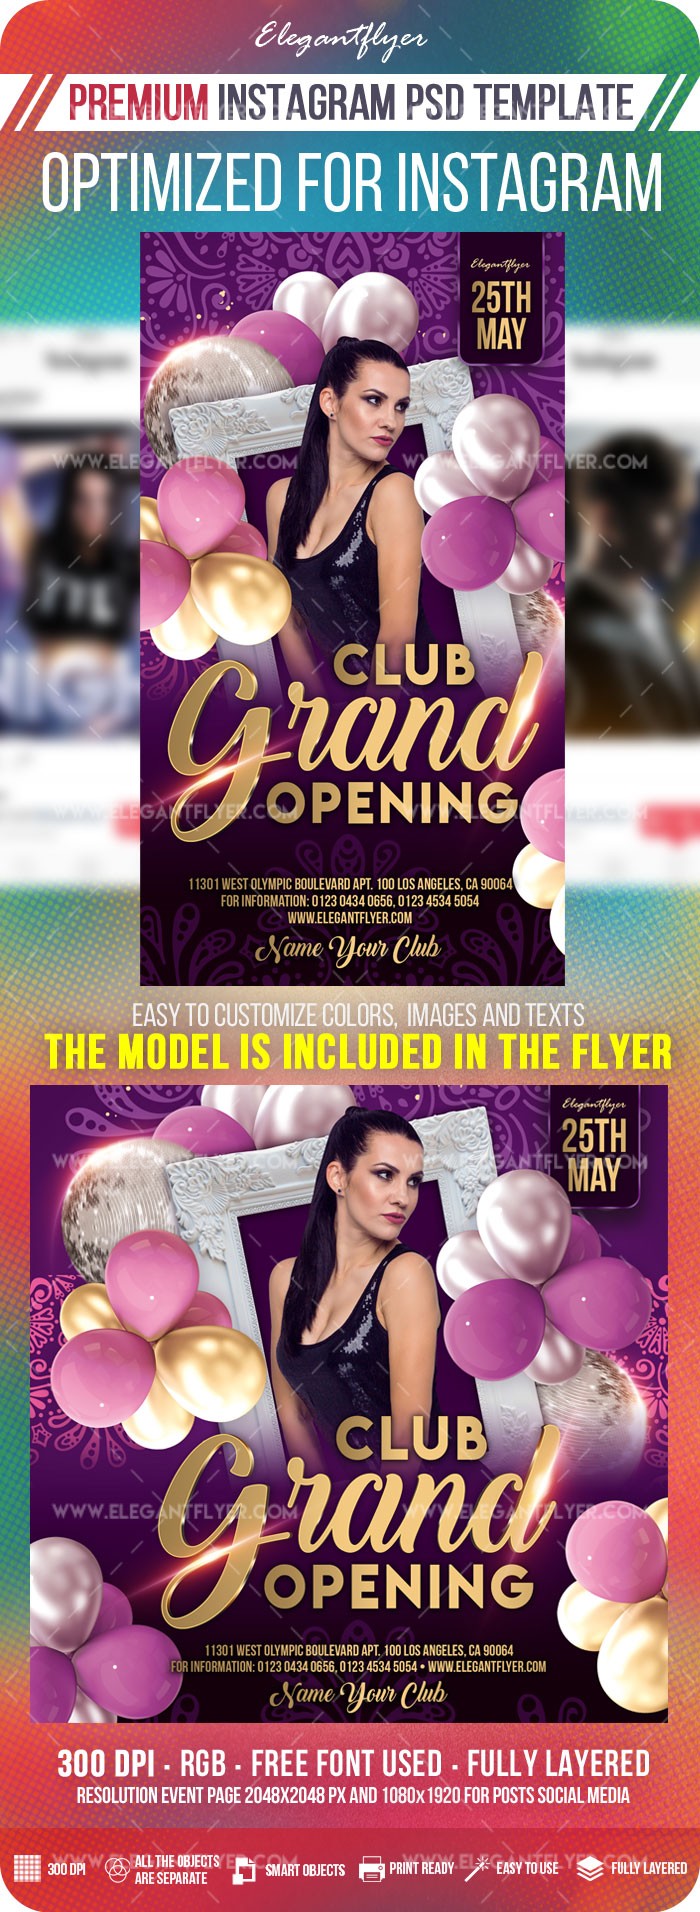 Club Grand Opening Instagram by ElegantFlyer